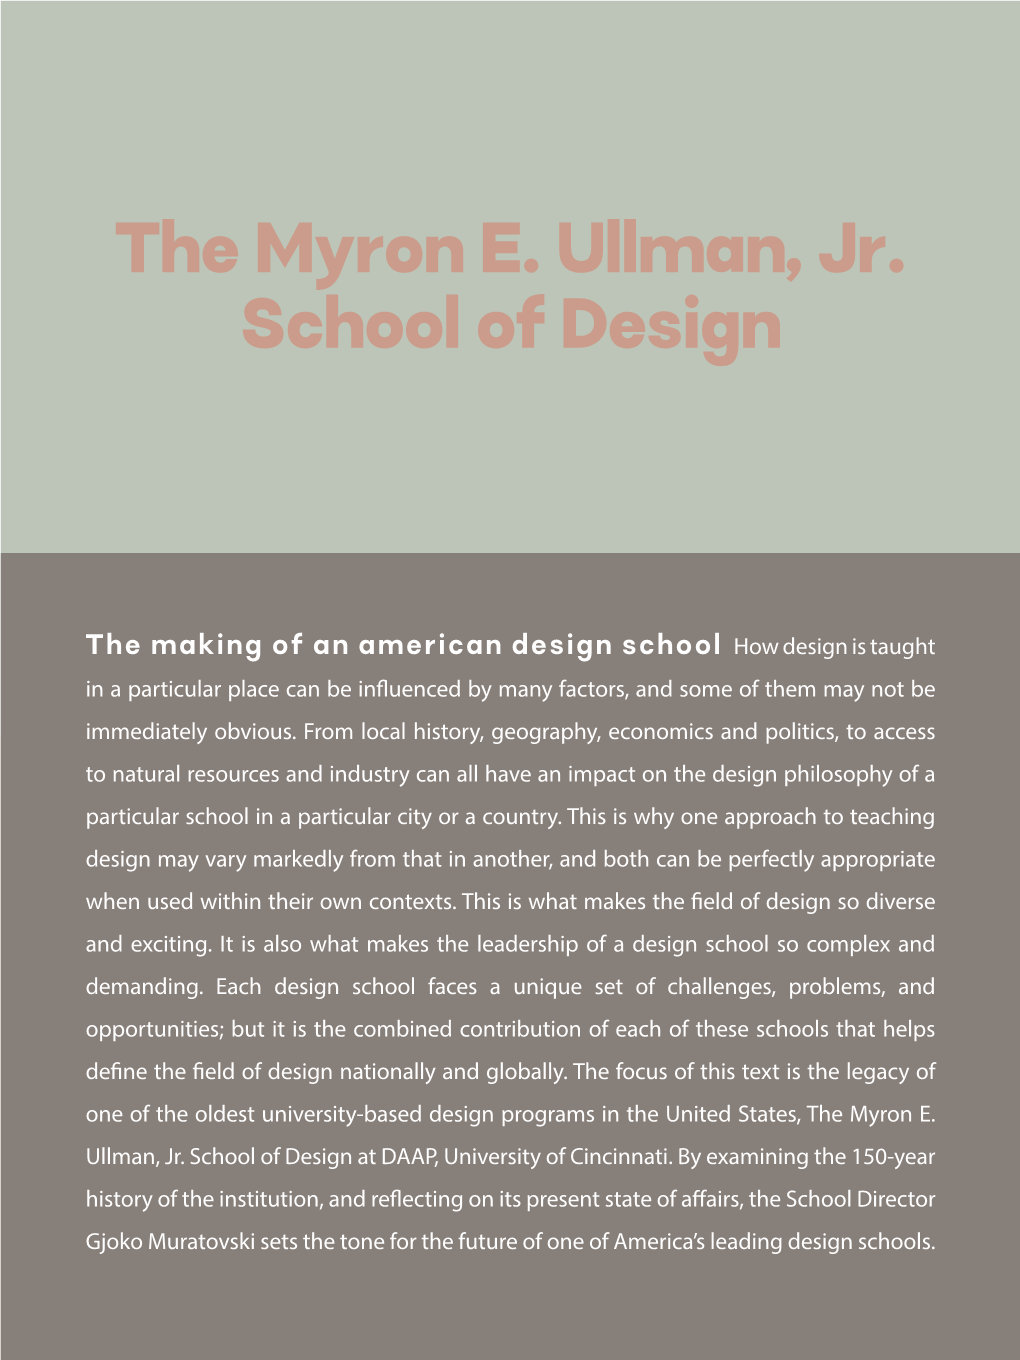 The Myron E. Ullman, Jr. School of Design